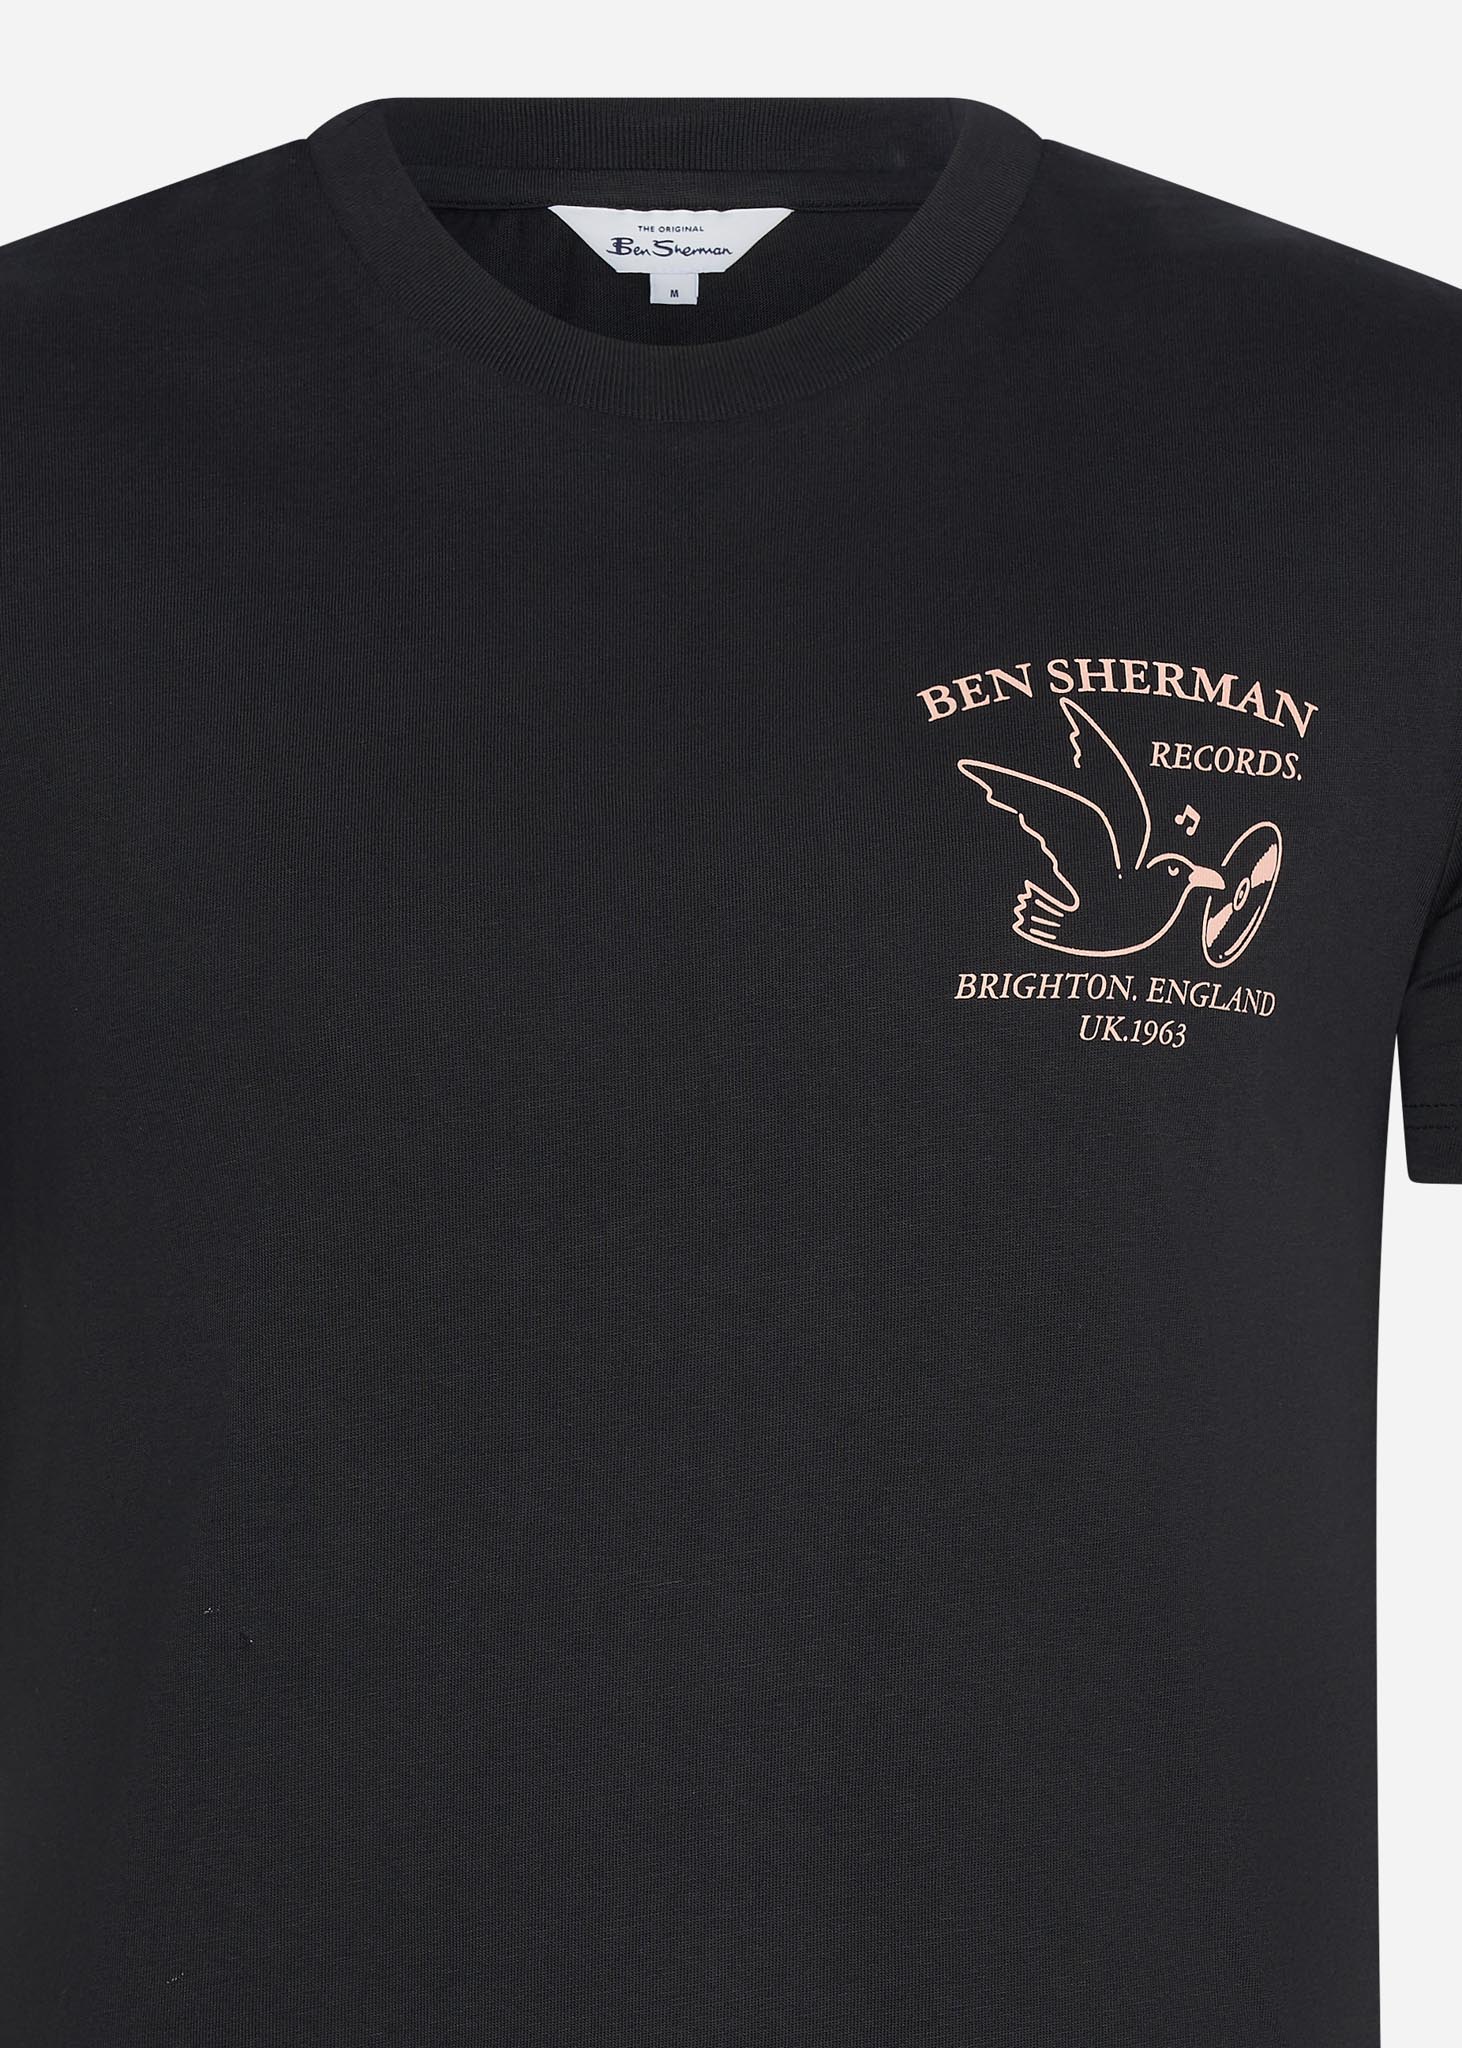 Ben Sherman T-shirts  Brighton records - black 